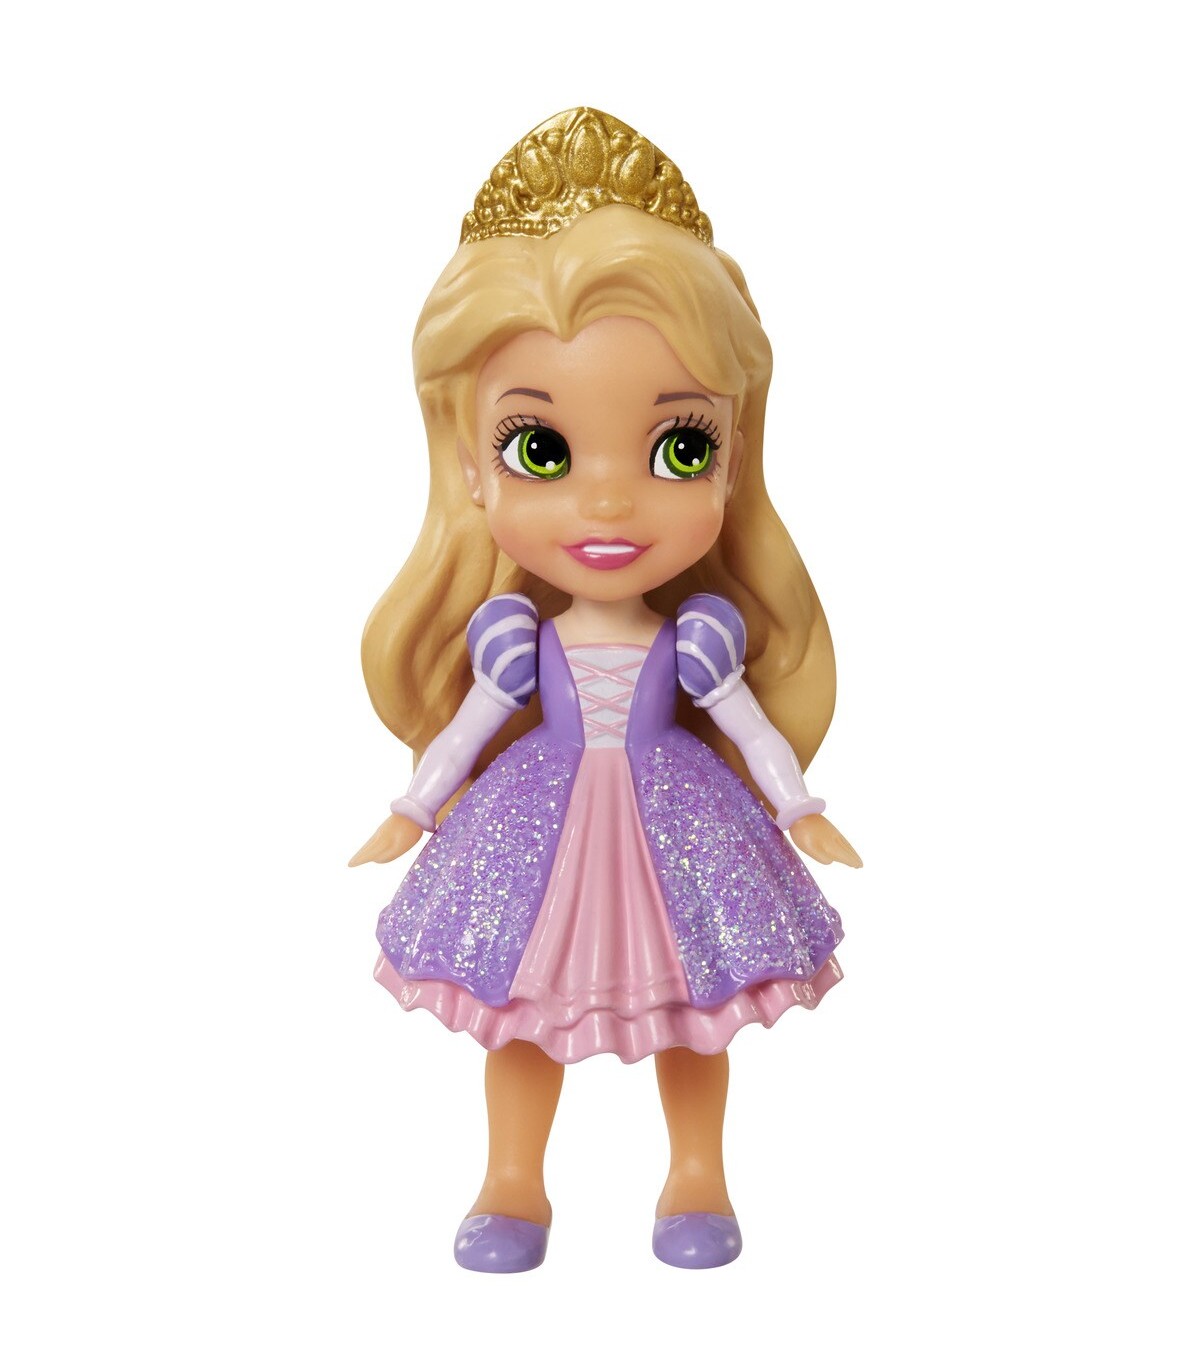 Aguanieve hacha constantemente Multi pack con 6 mini muñecas Disney Princess